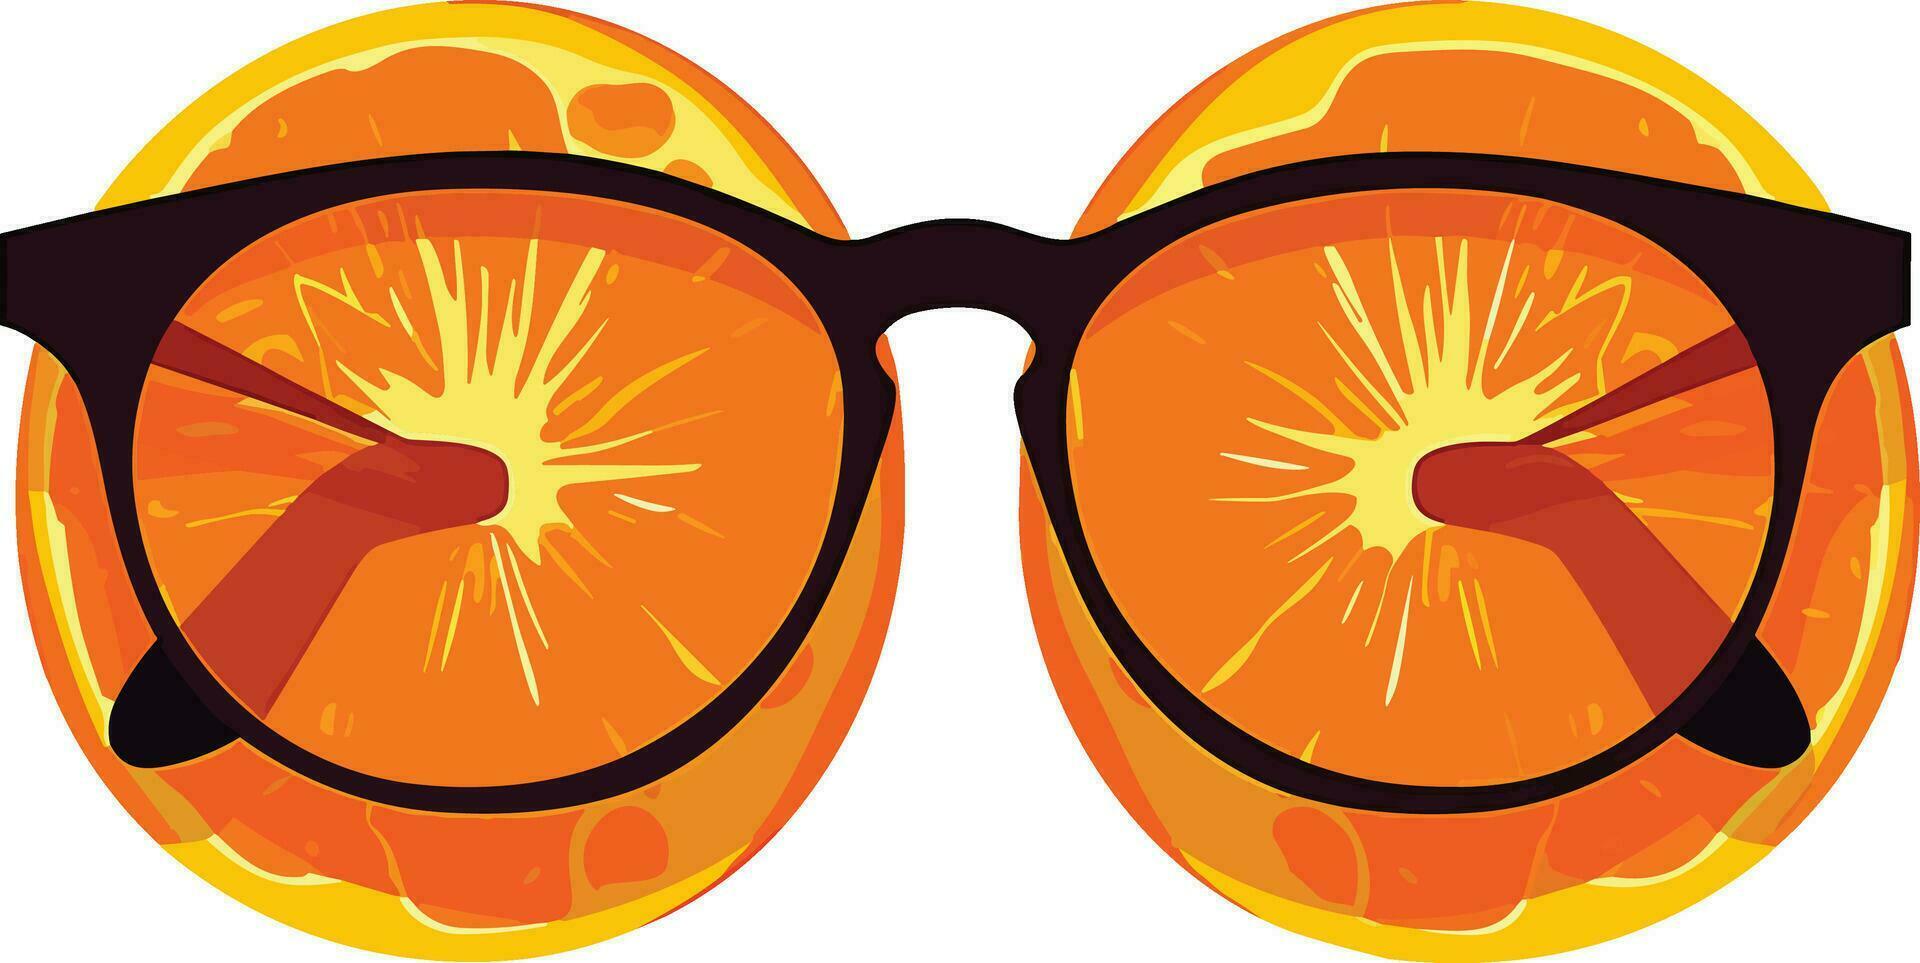 vers besnoeiing citrus fruit en elegant bril Aan wit achtergrond, oog bril met sinaasappels illustratie vector